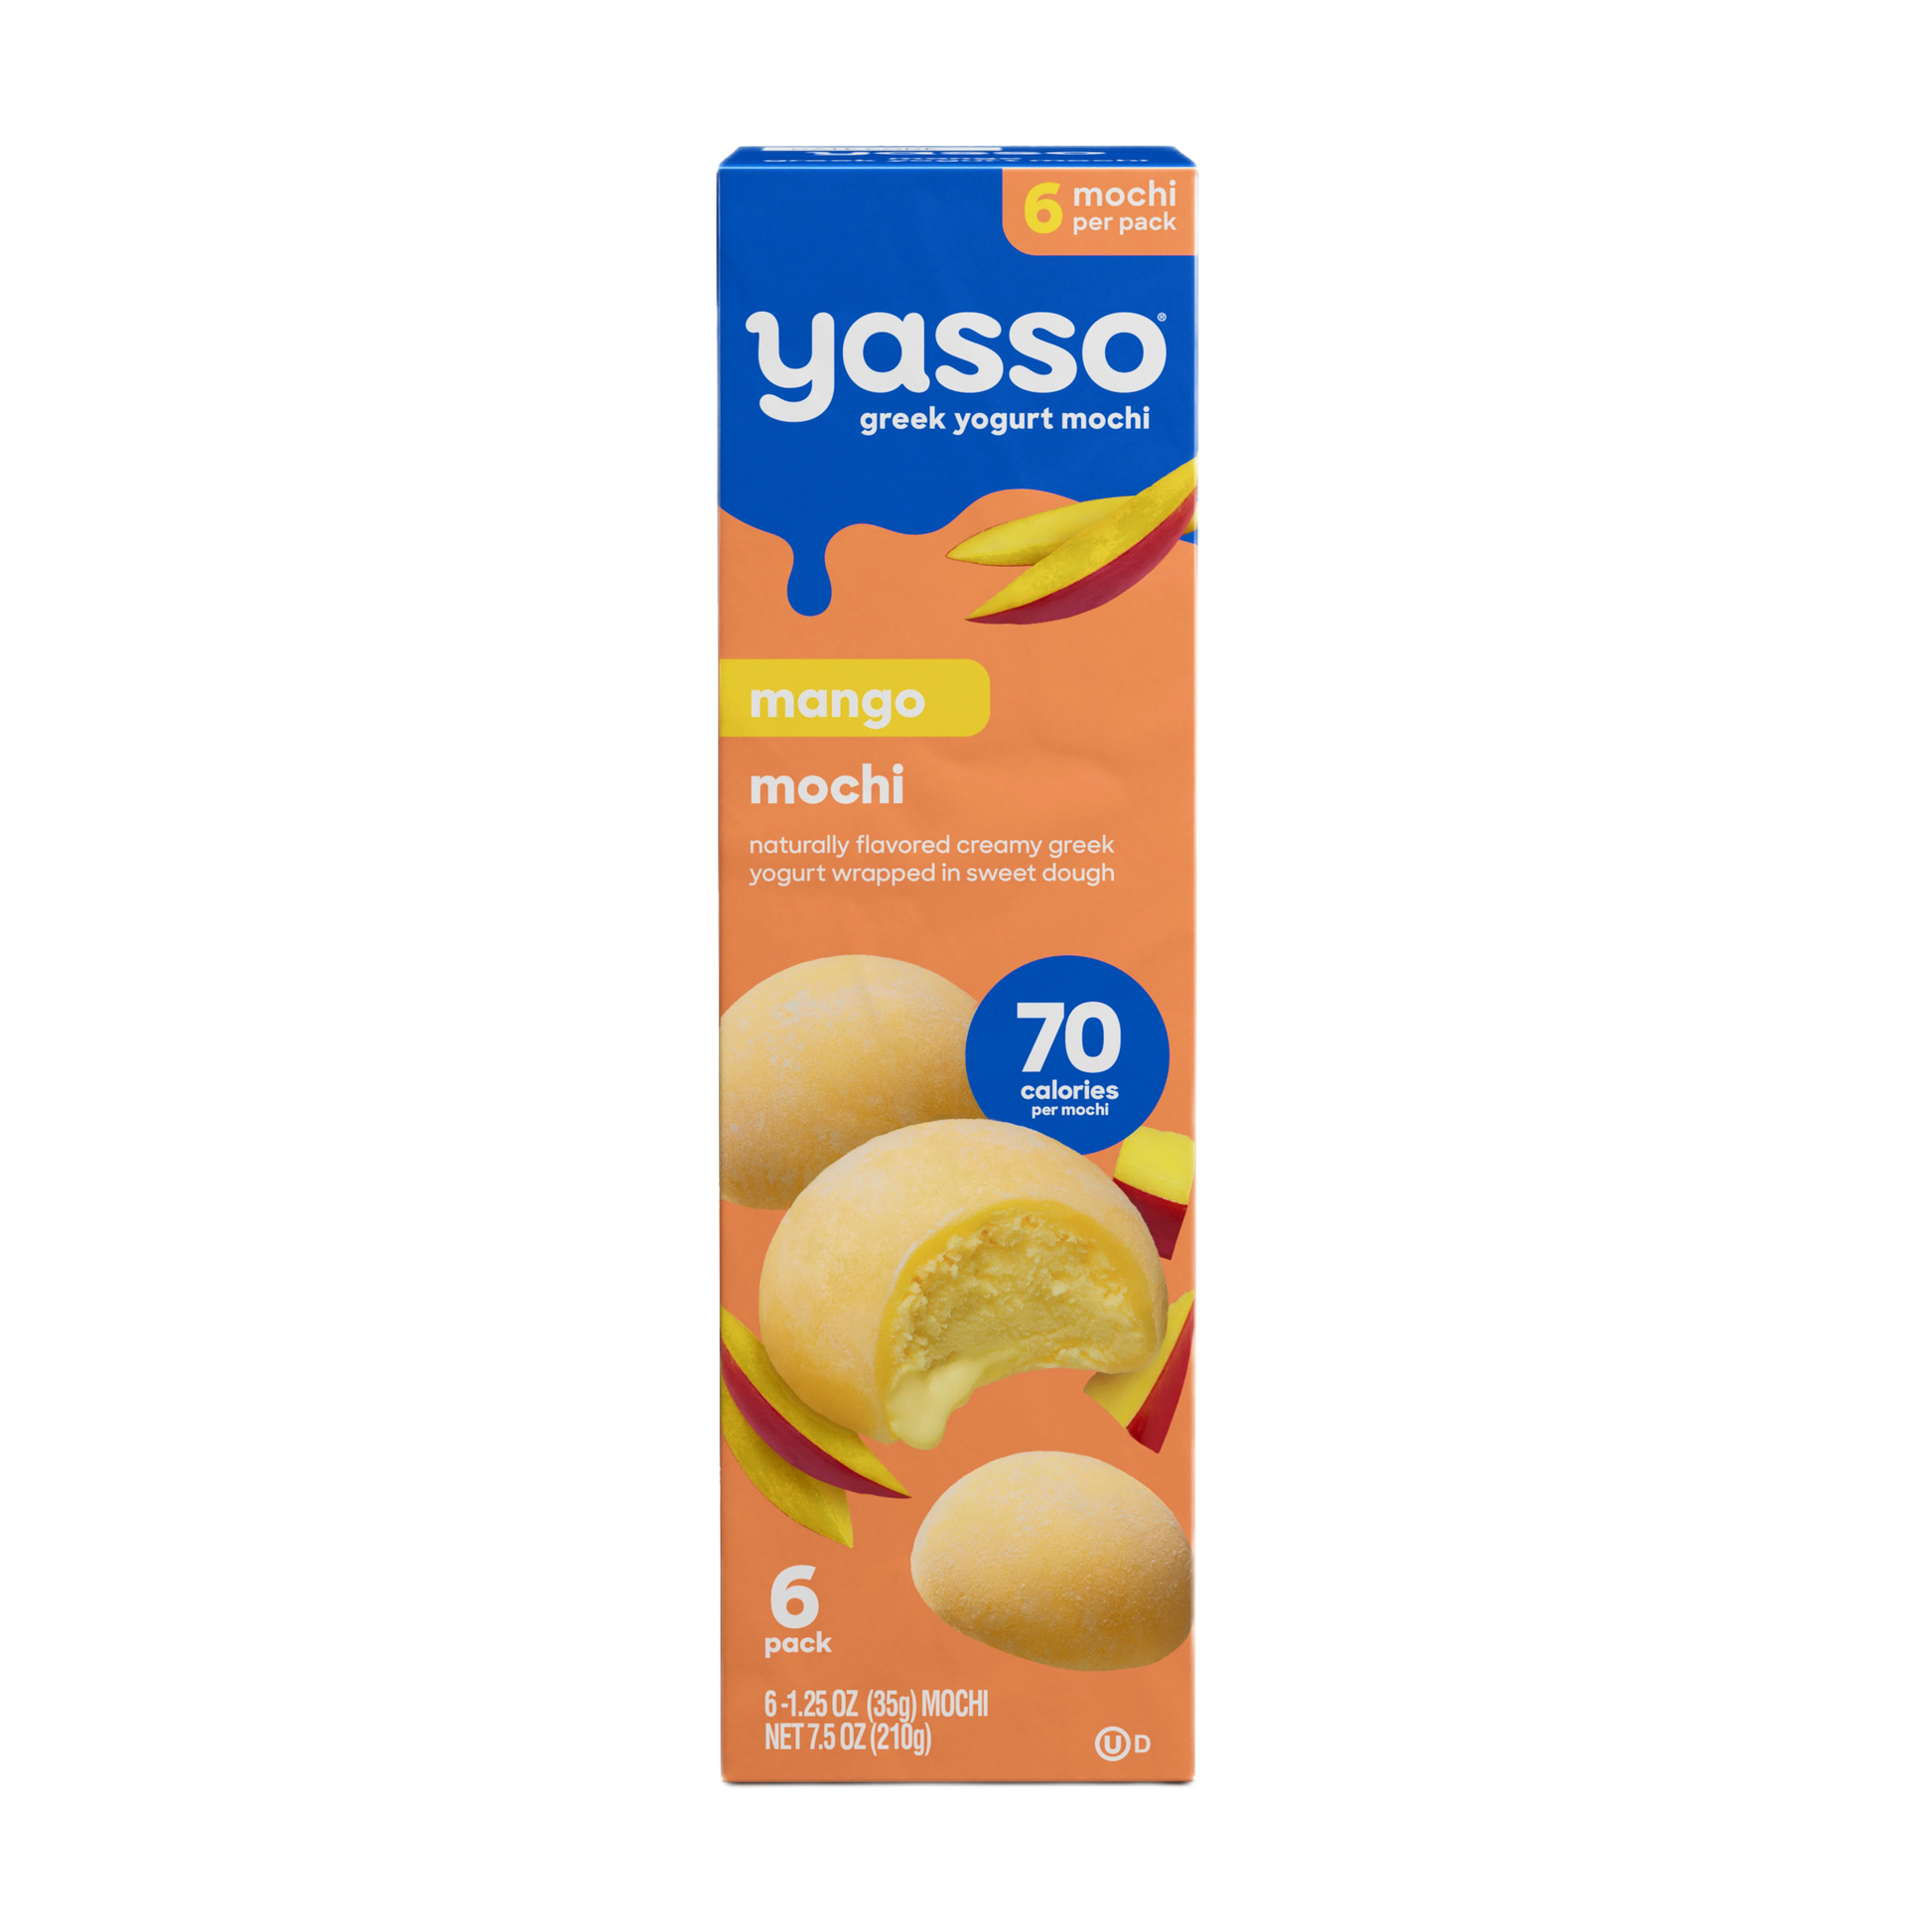 yasso mango mochi